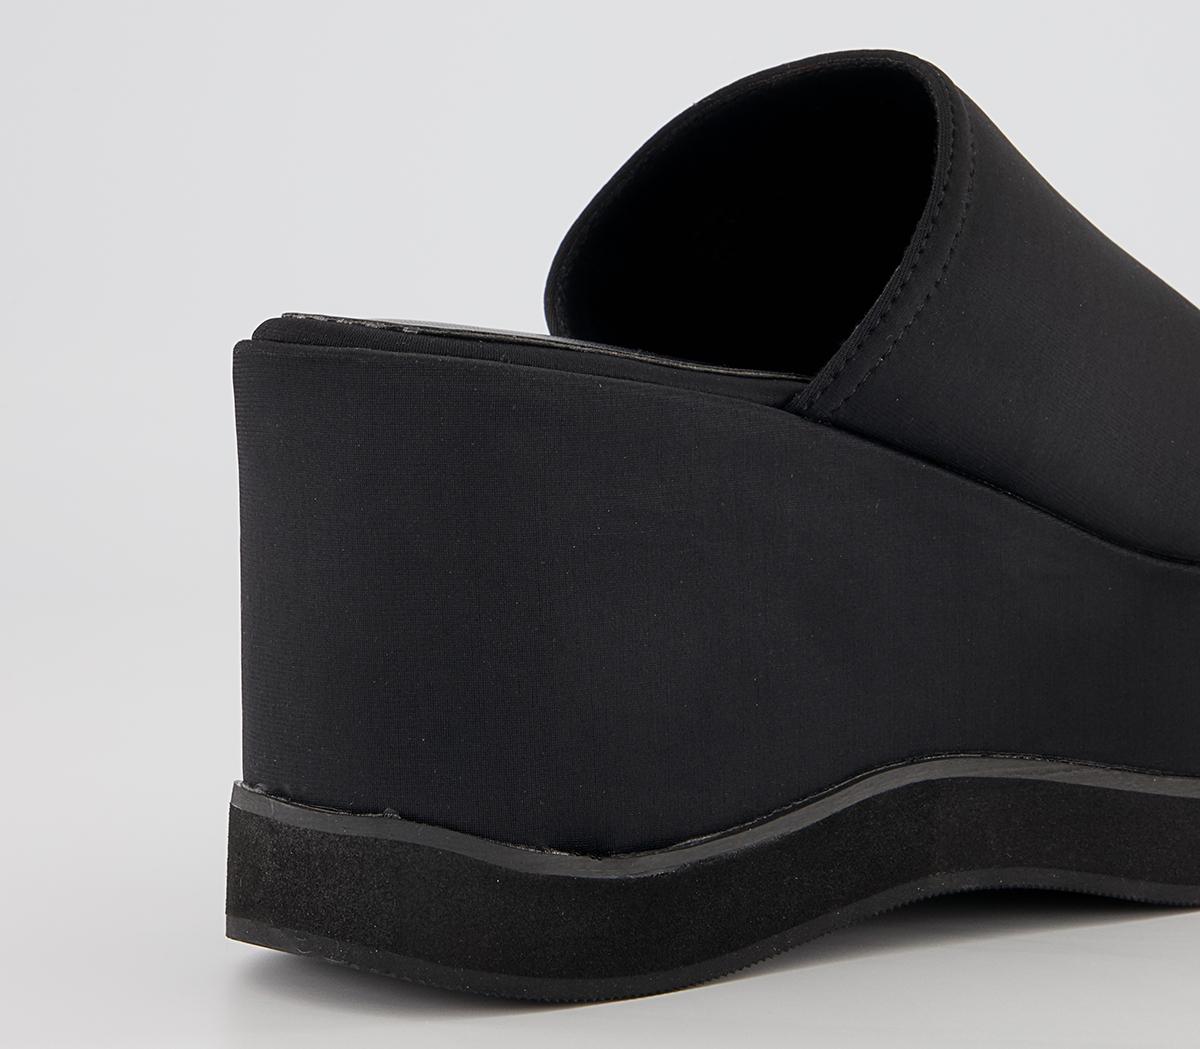 OFFICE Hiley Chunky Flatform Shoes Black - High Heels